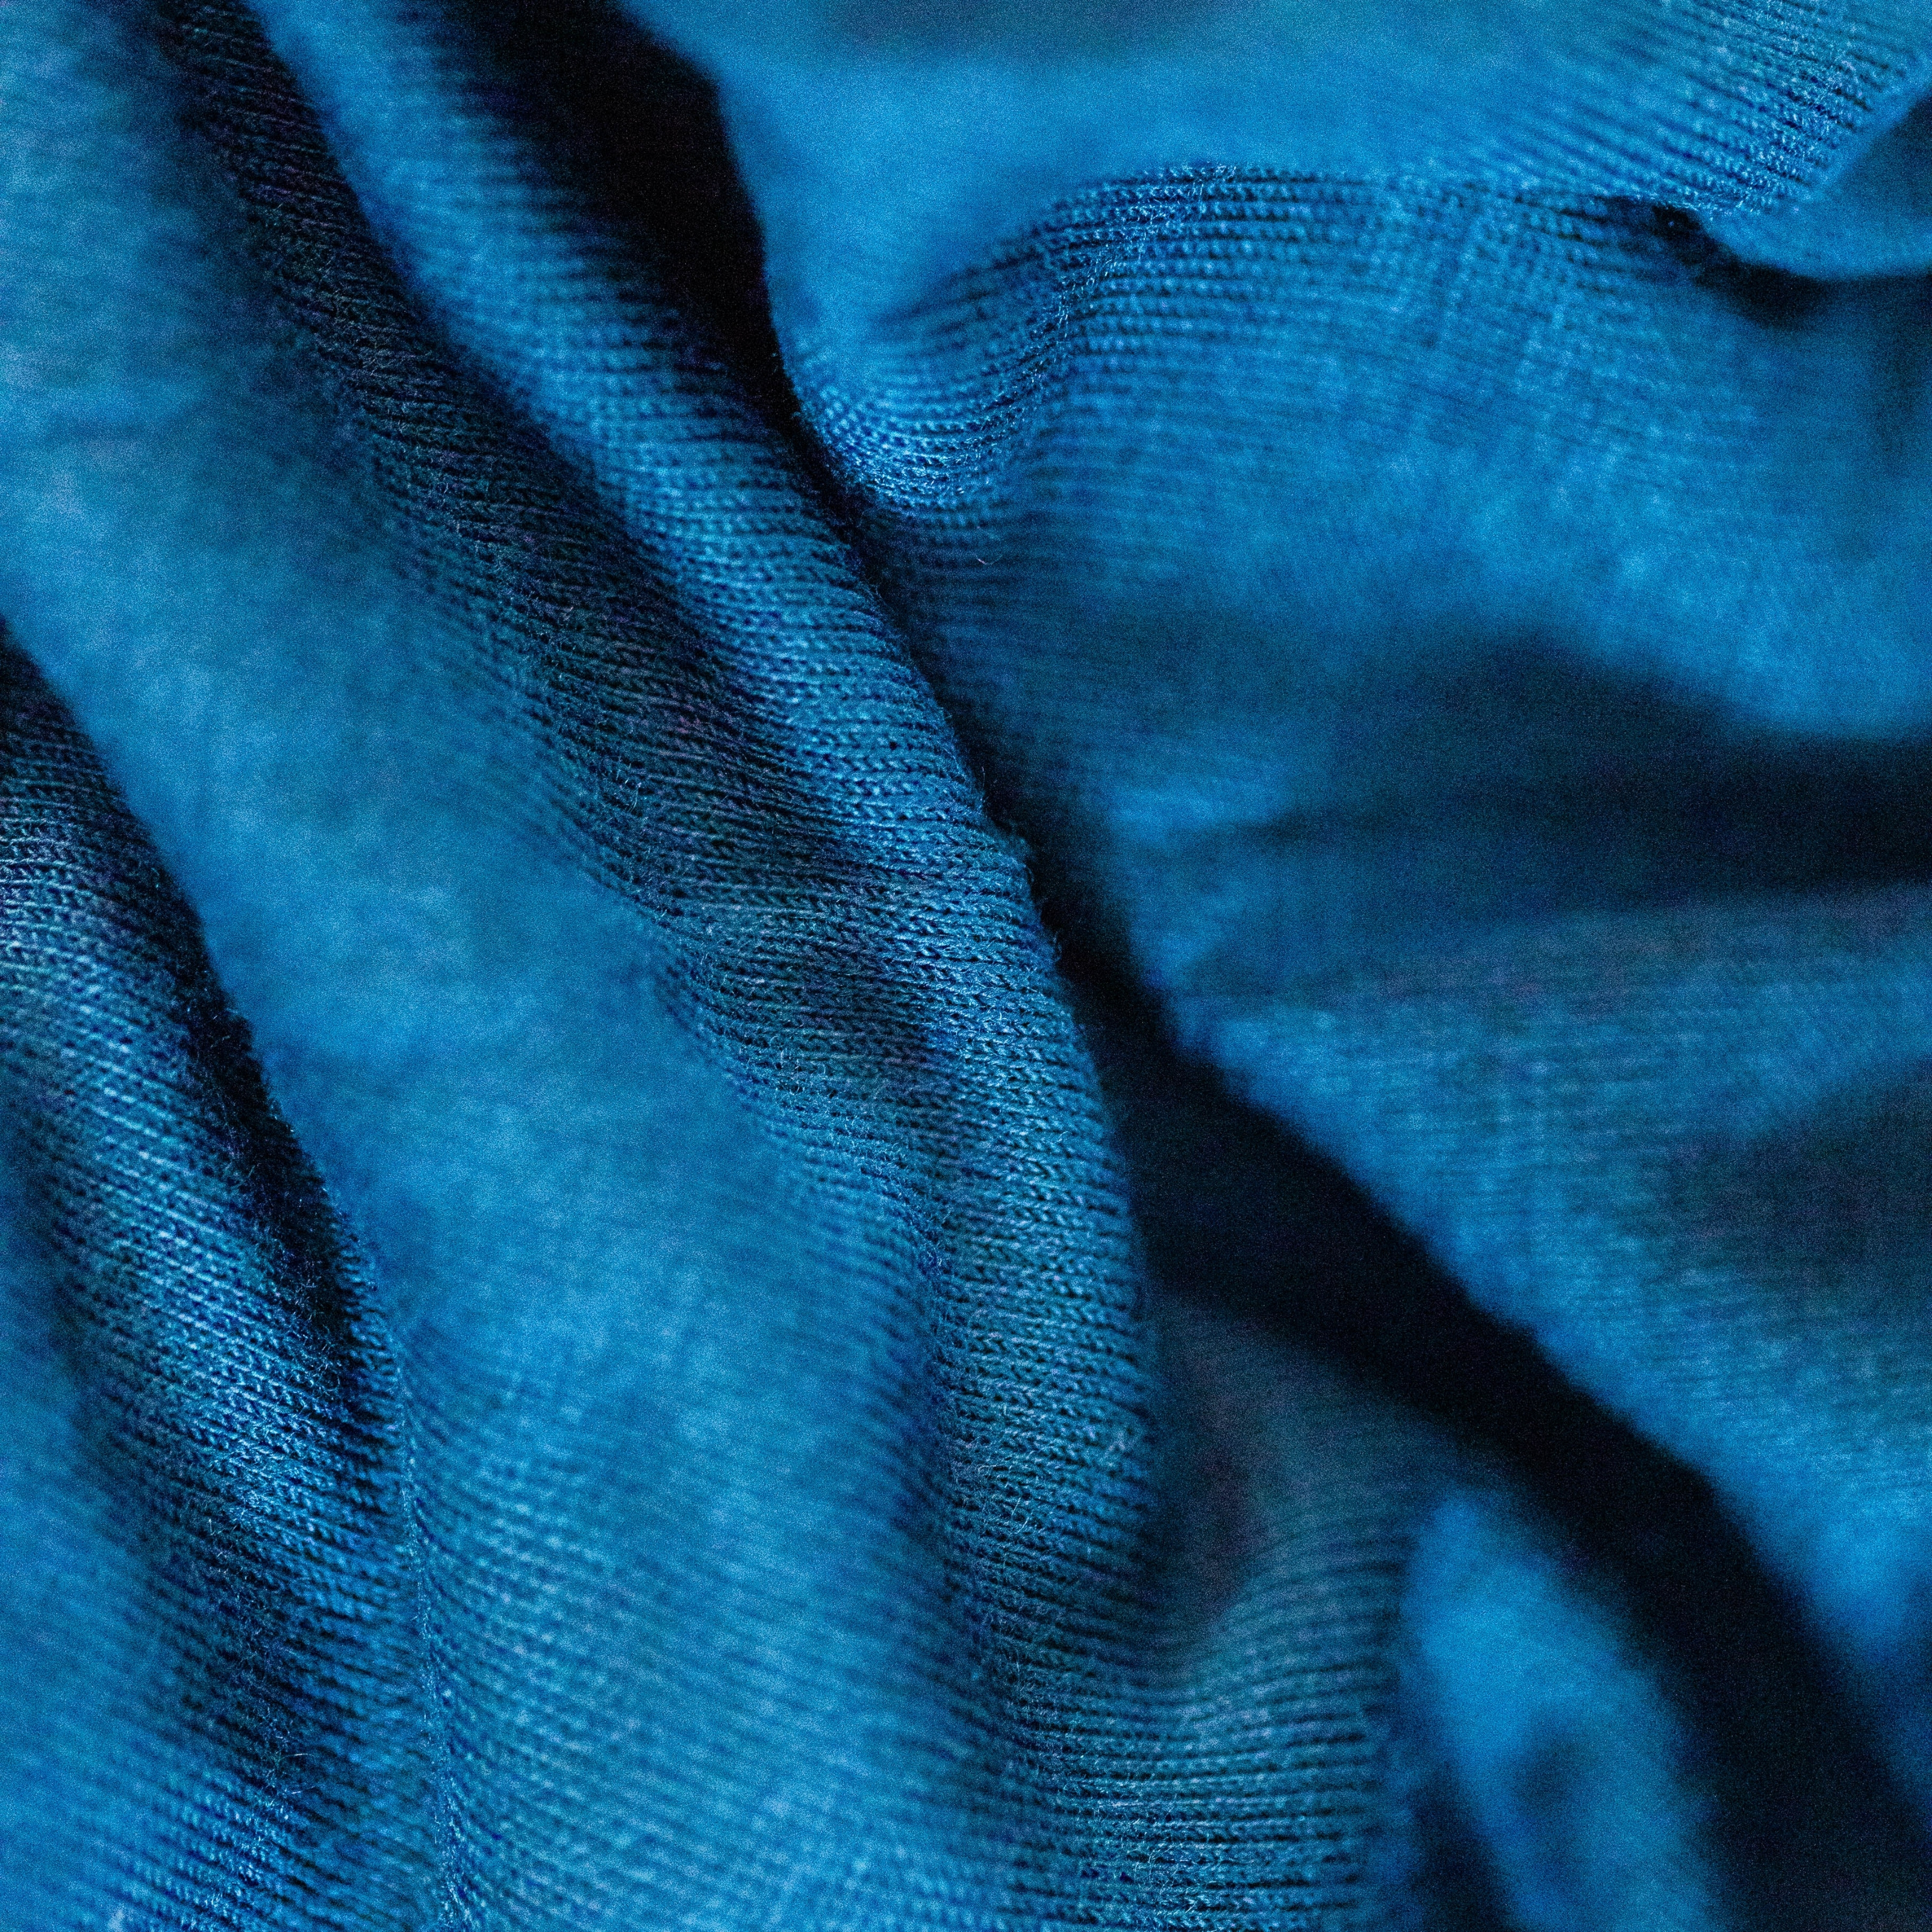 iPad Wallpapers Blue Velvet Fabric Cloth iPad Wallpaper 3208x3208 px